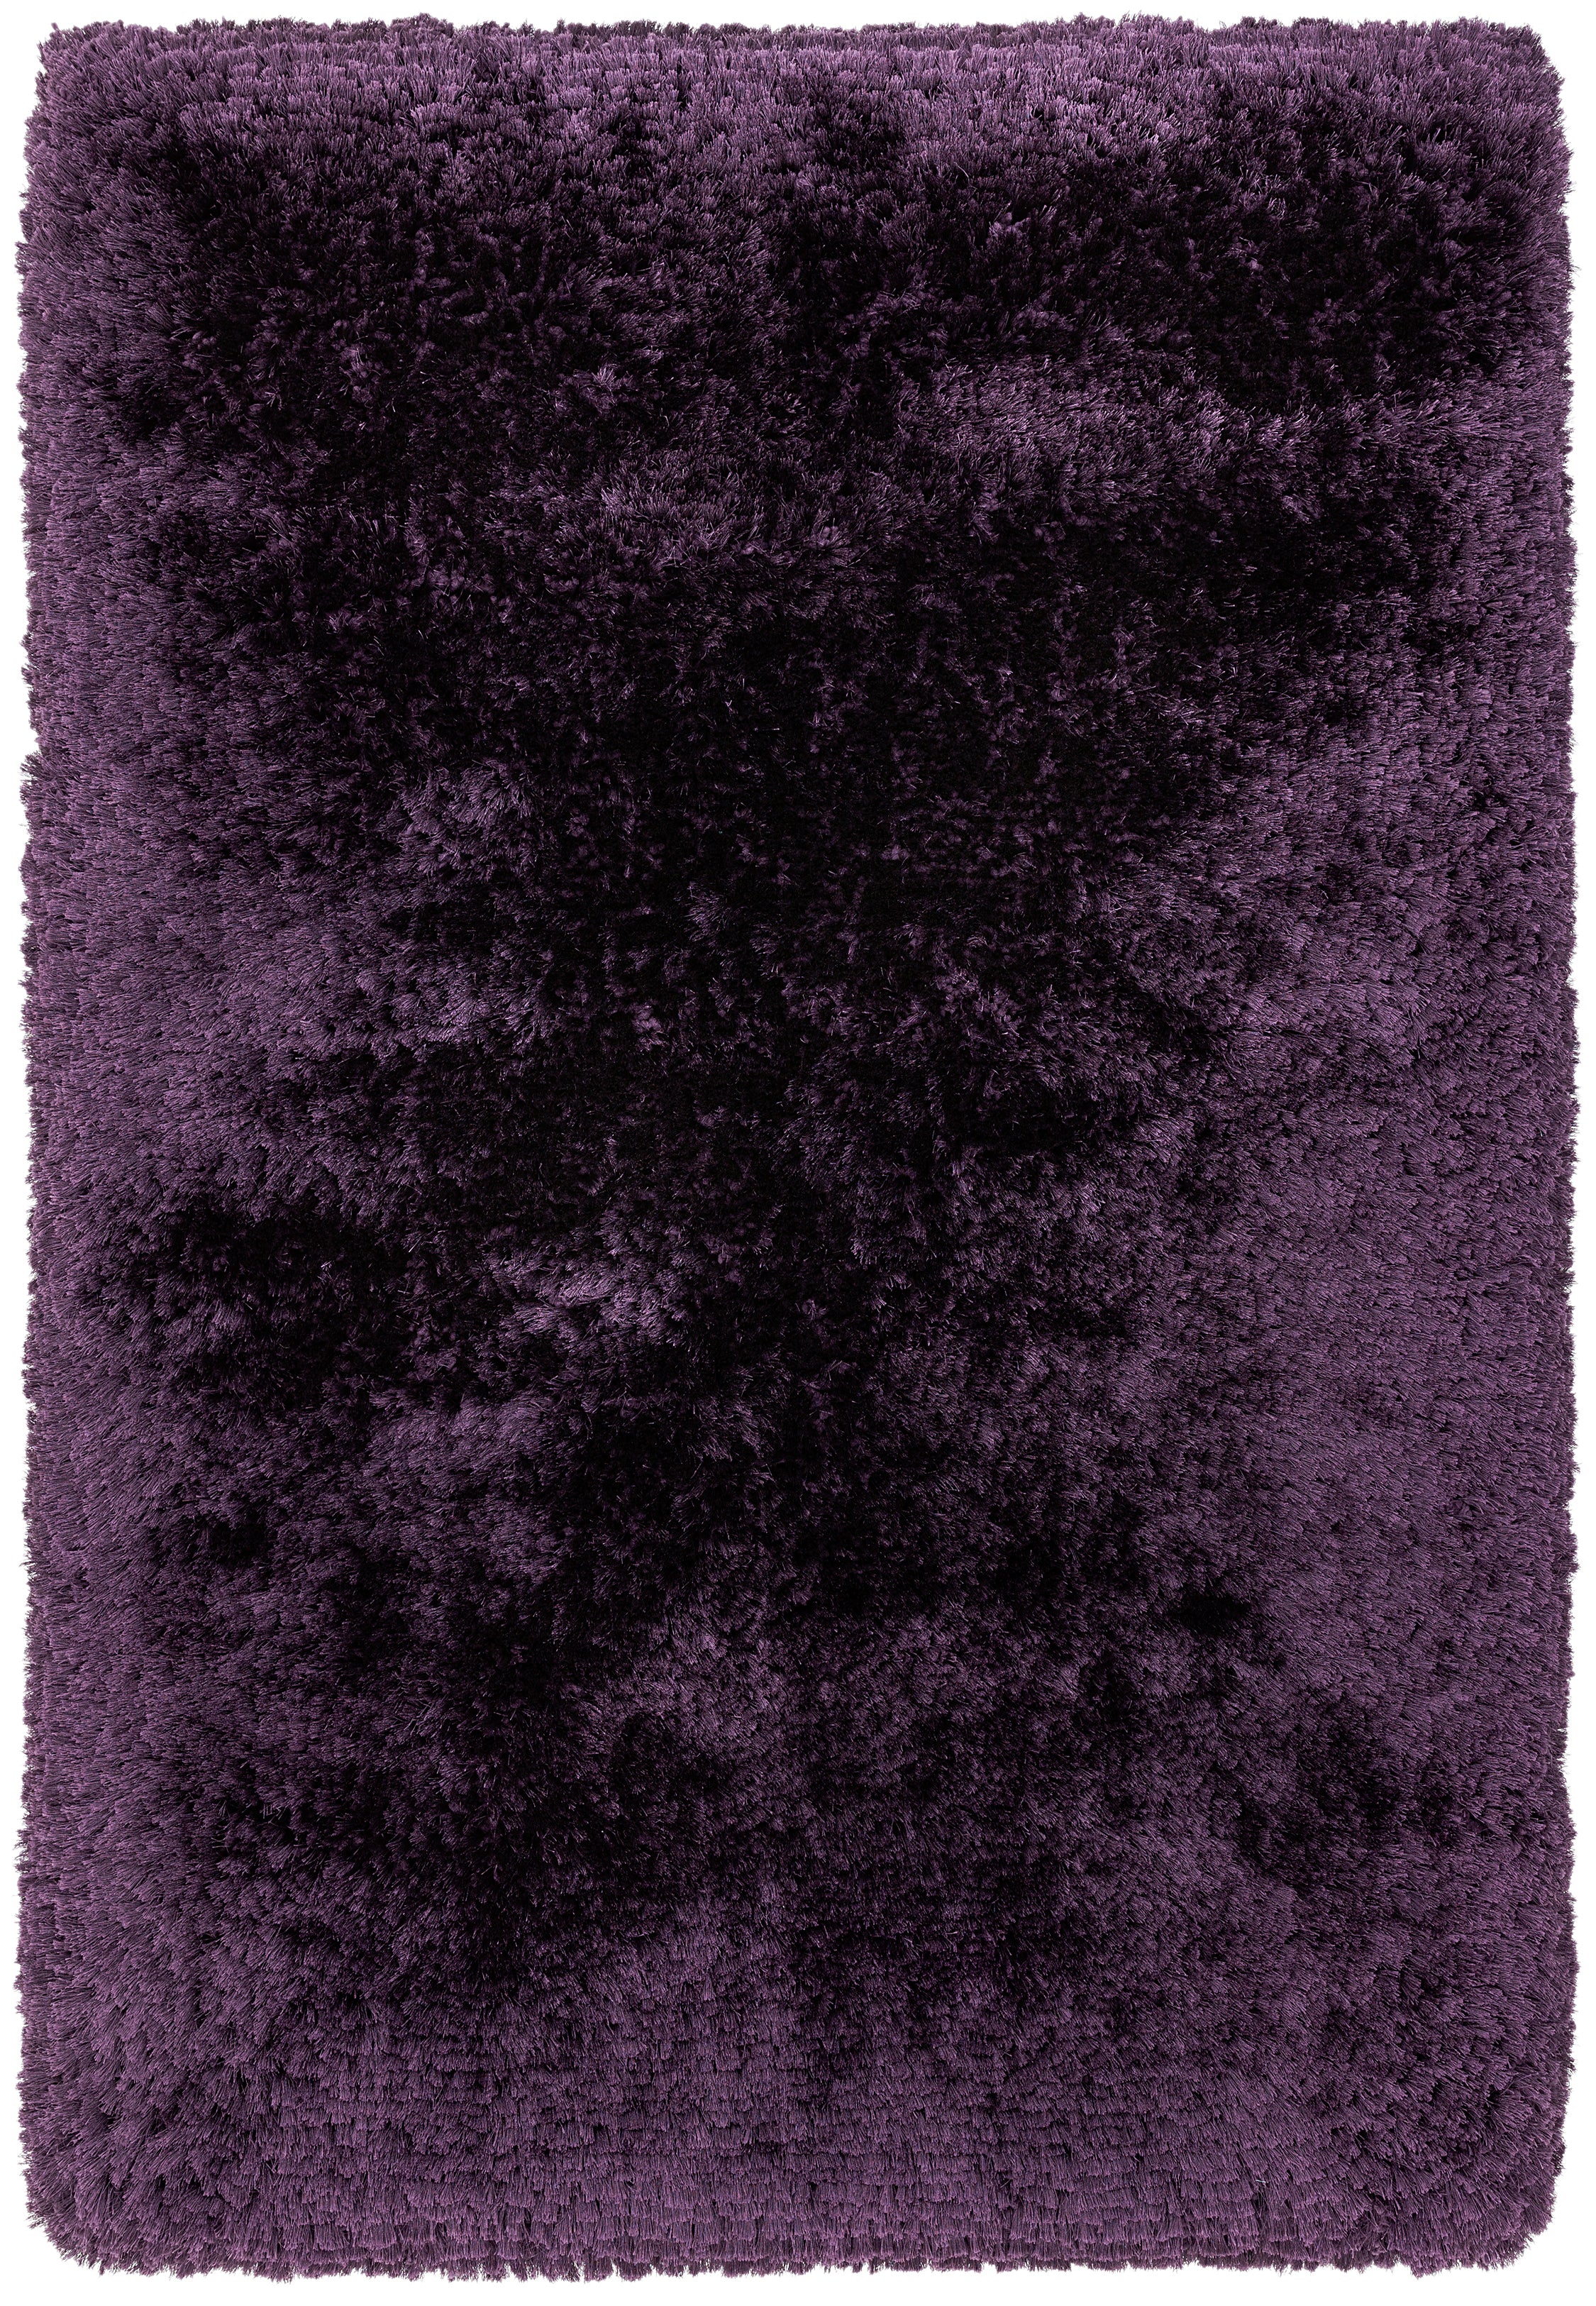 Plush Purple Rug